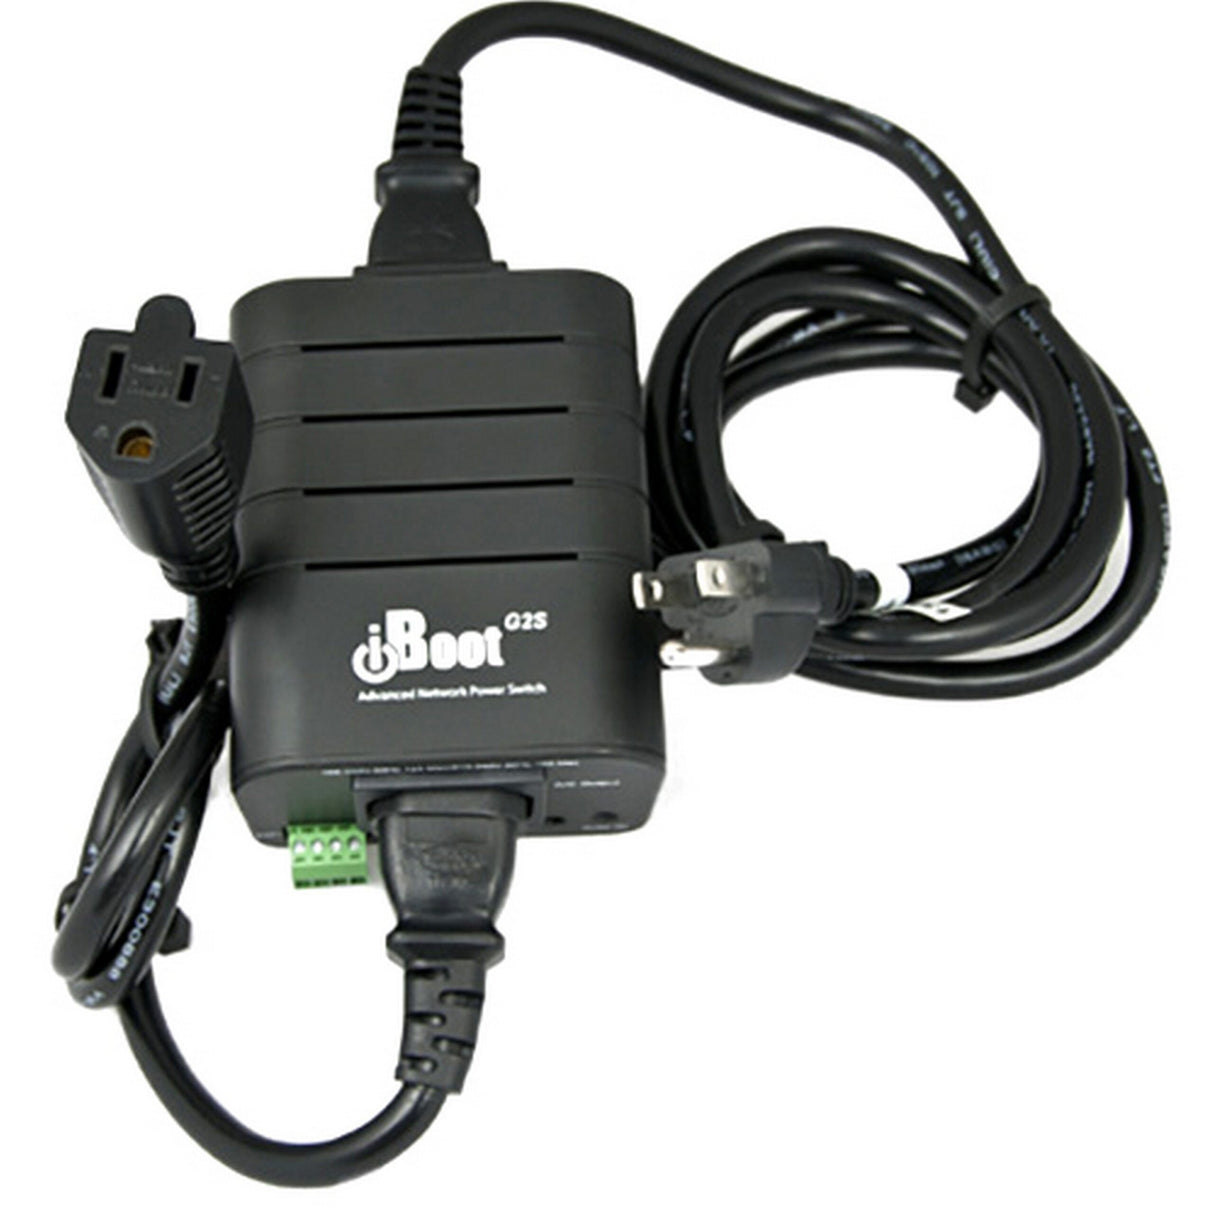 Dataprobe iBoot-G2S 2 Port 10 / 100 Network Power Switch